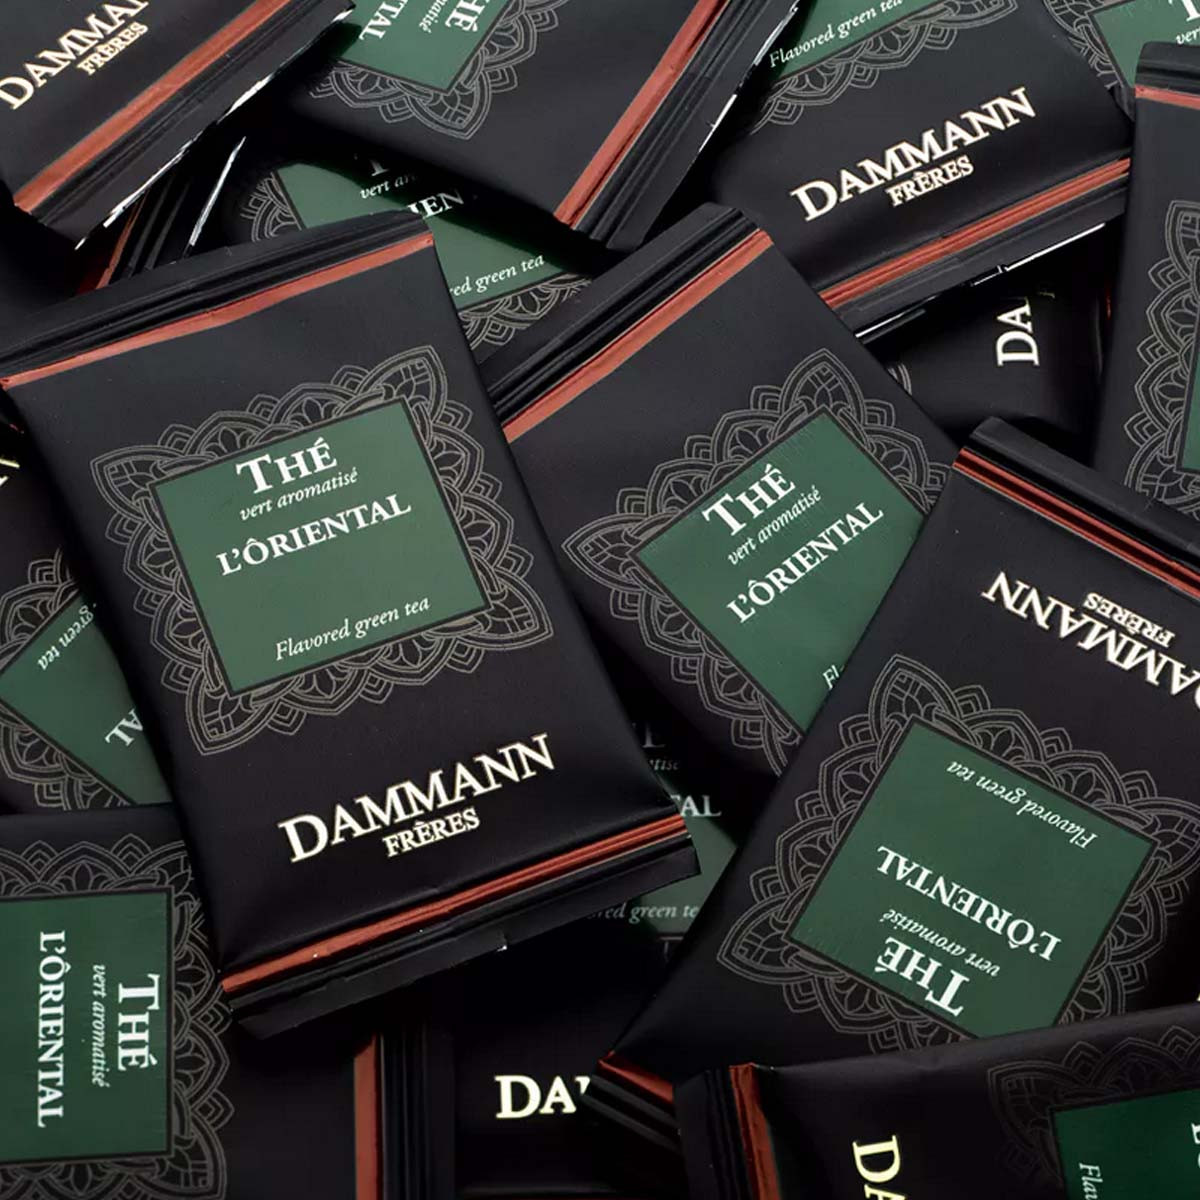 Dammann® L'Oriental Loose Tea